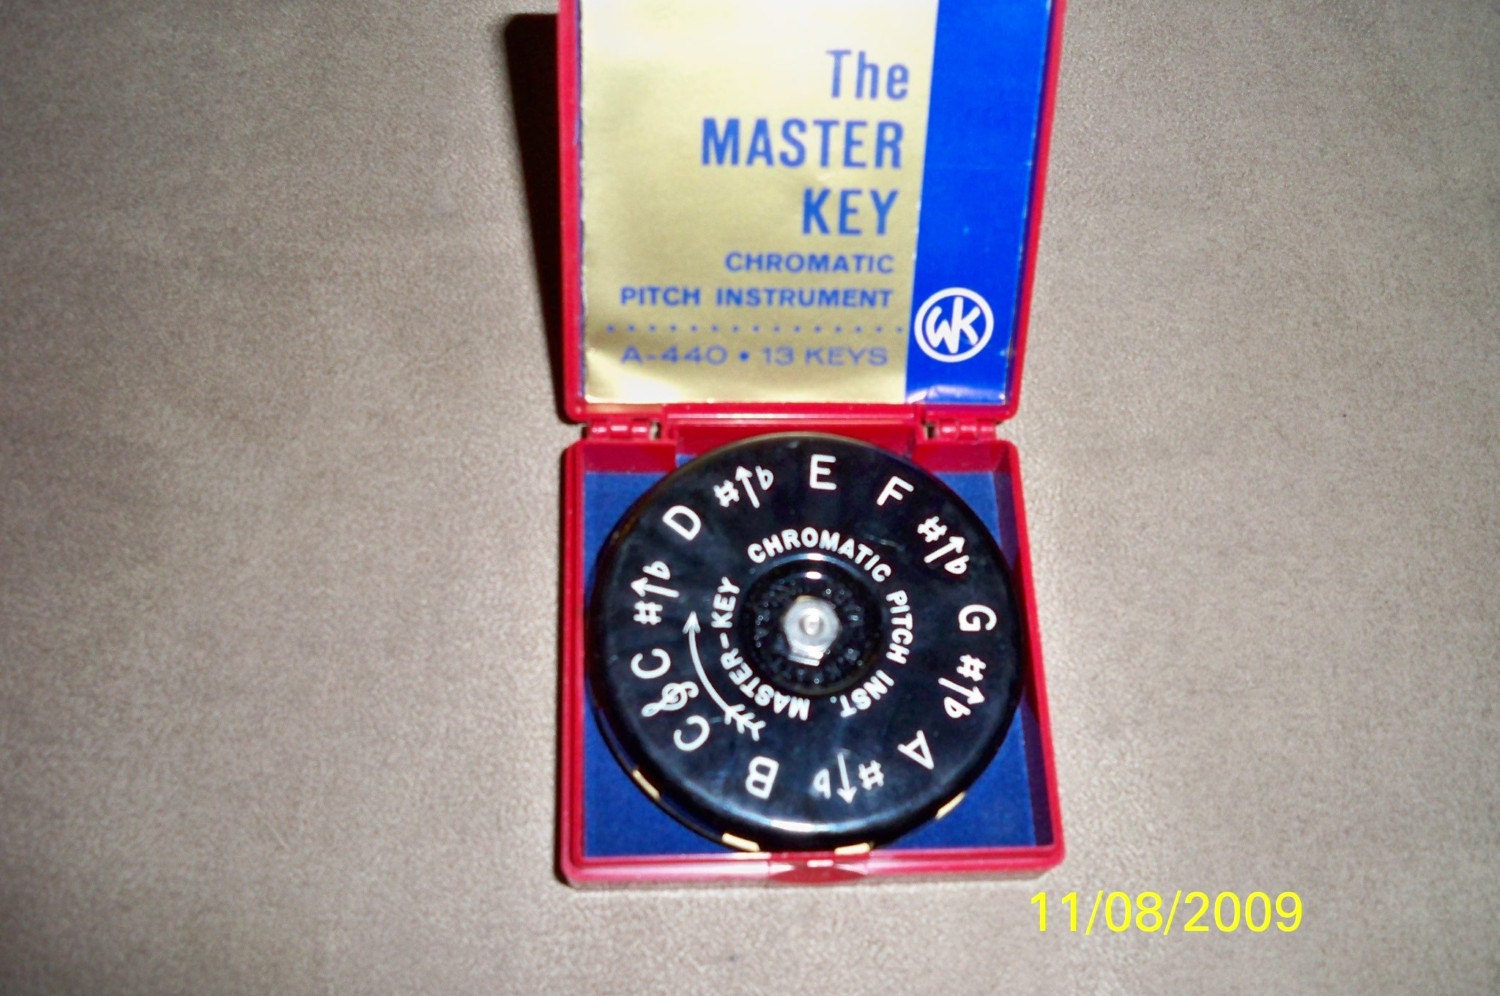 the master key chromatic pitch instrument